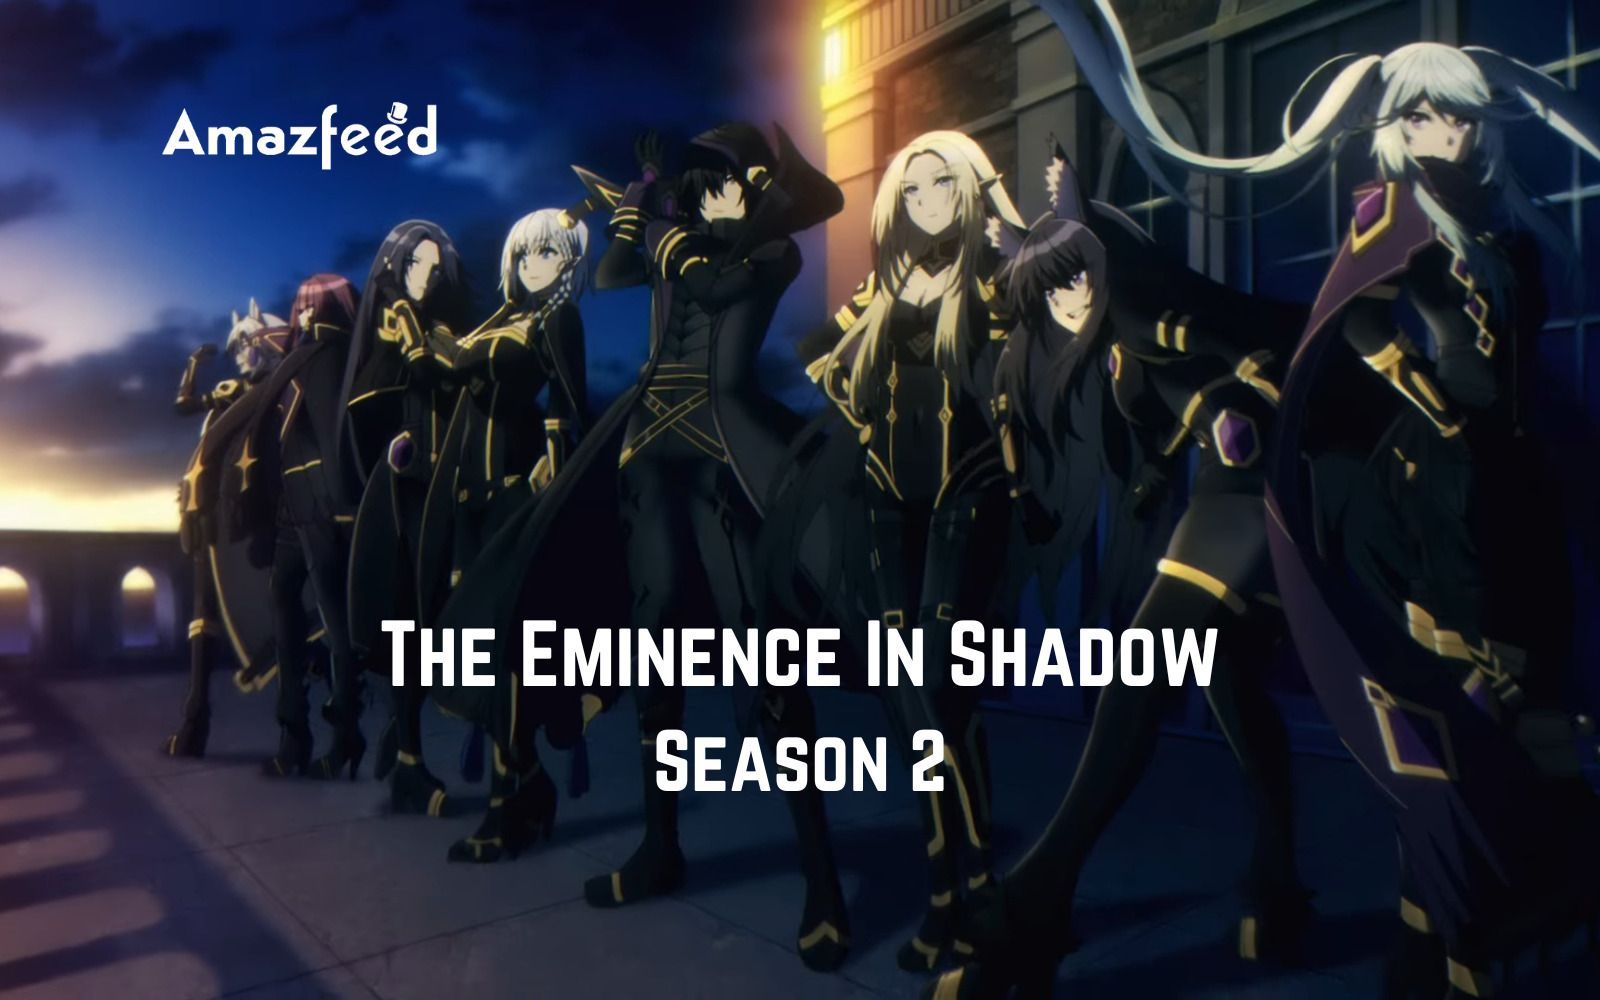 Multiple online leakers report The Eminence in Shadow season 2